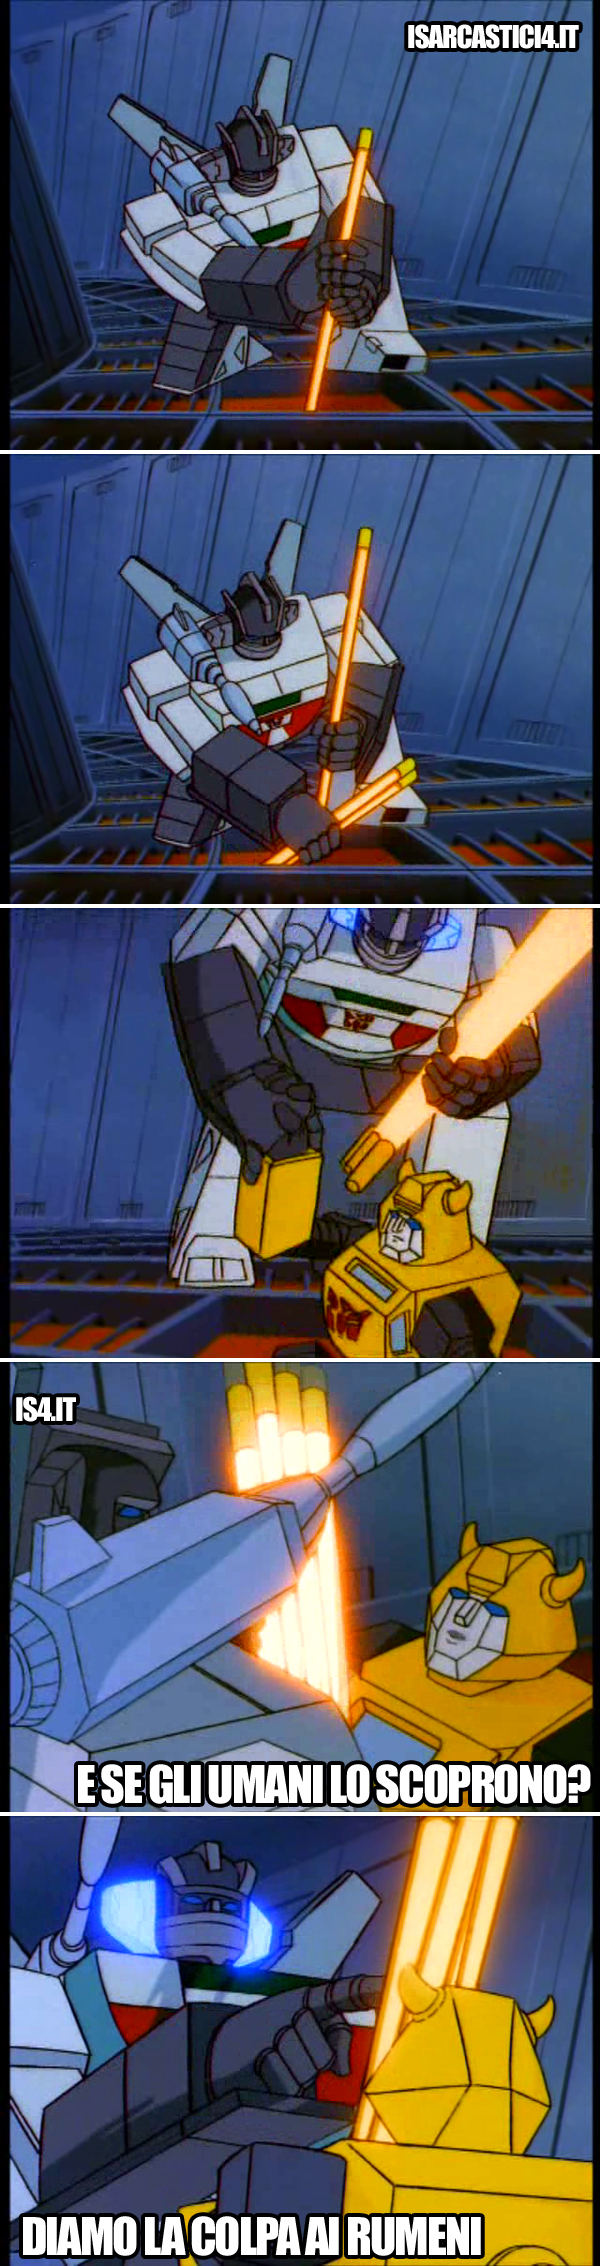 Transformers meme ita - Furto rame